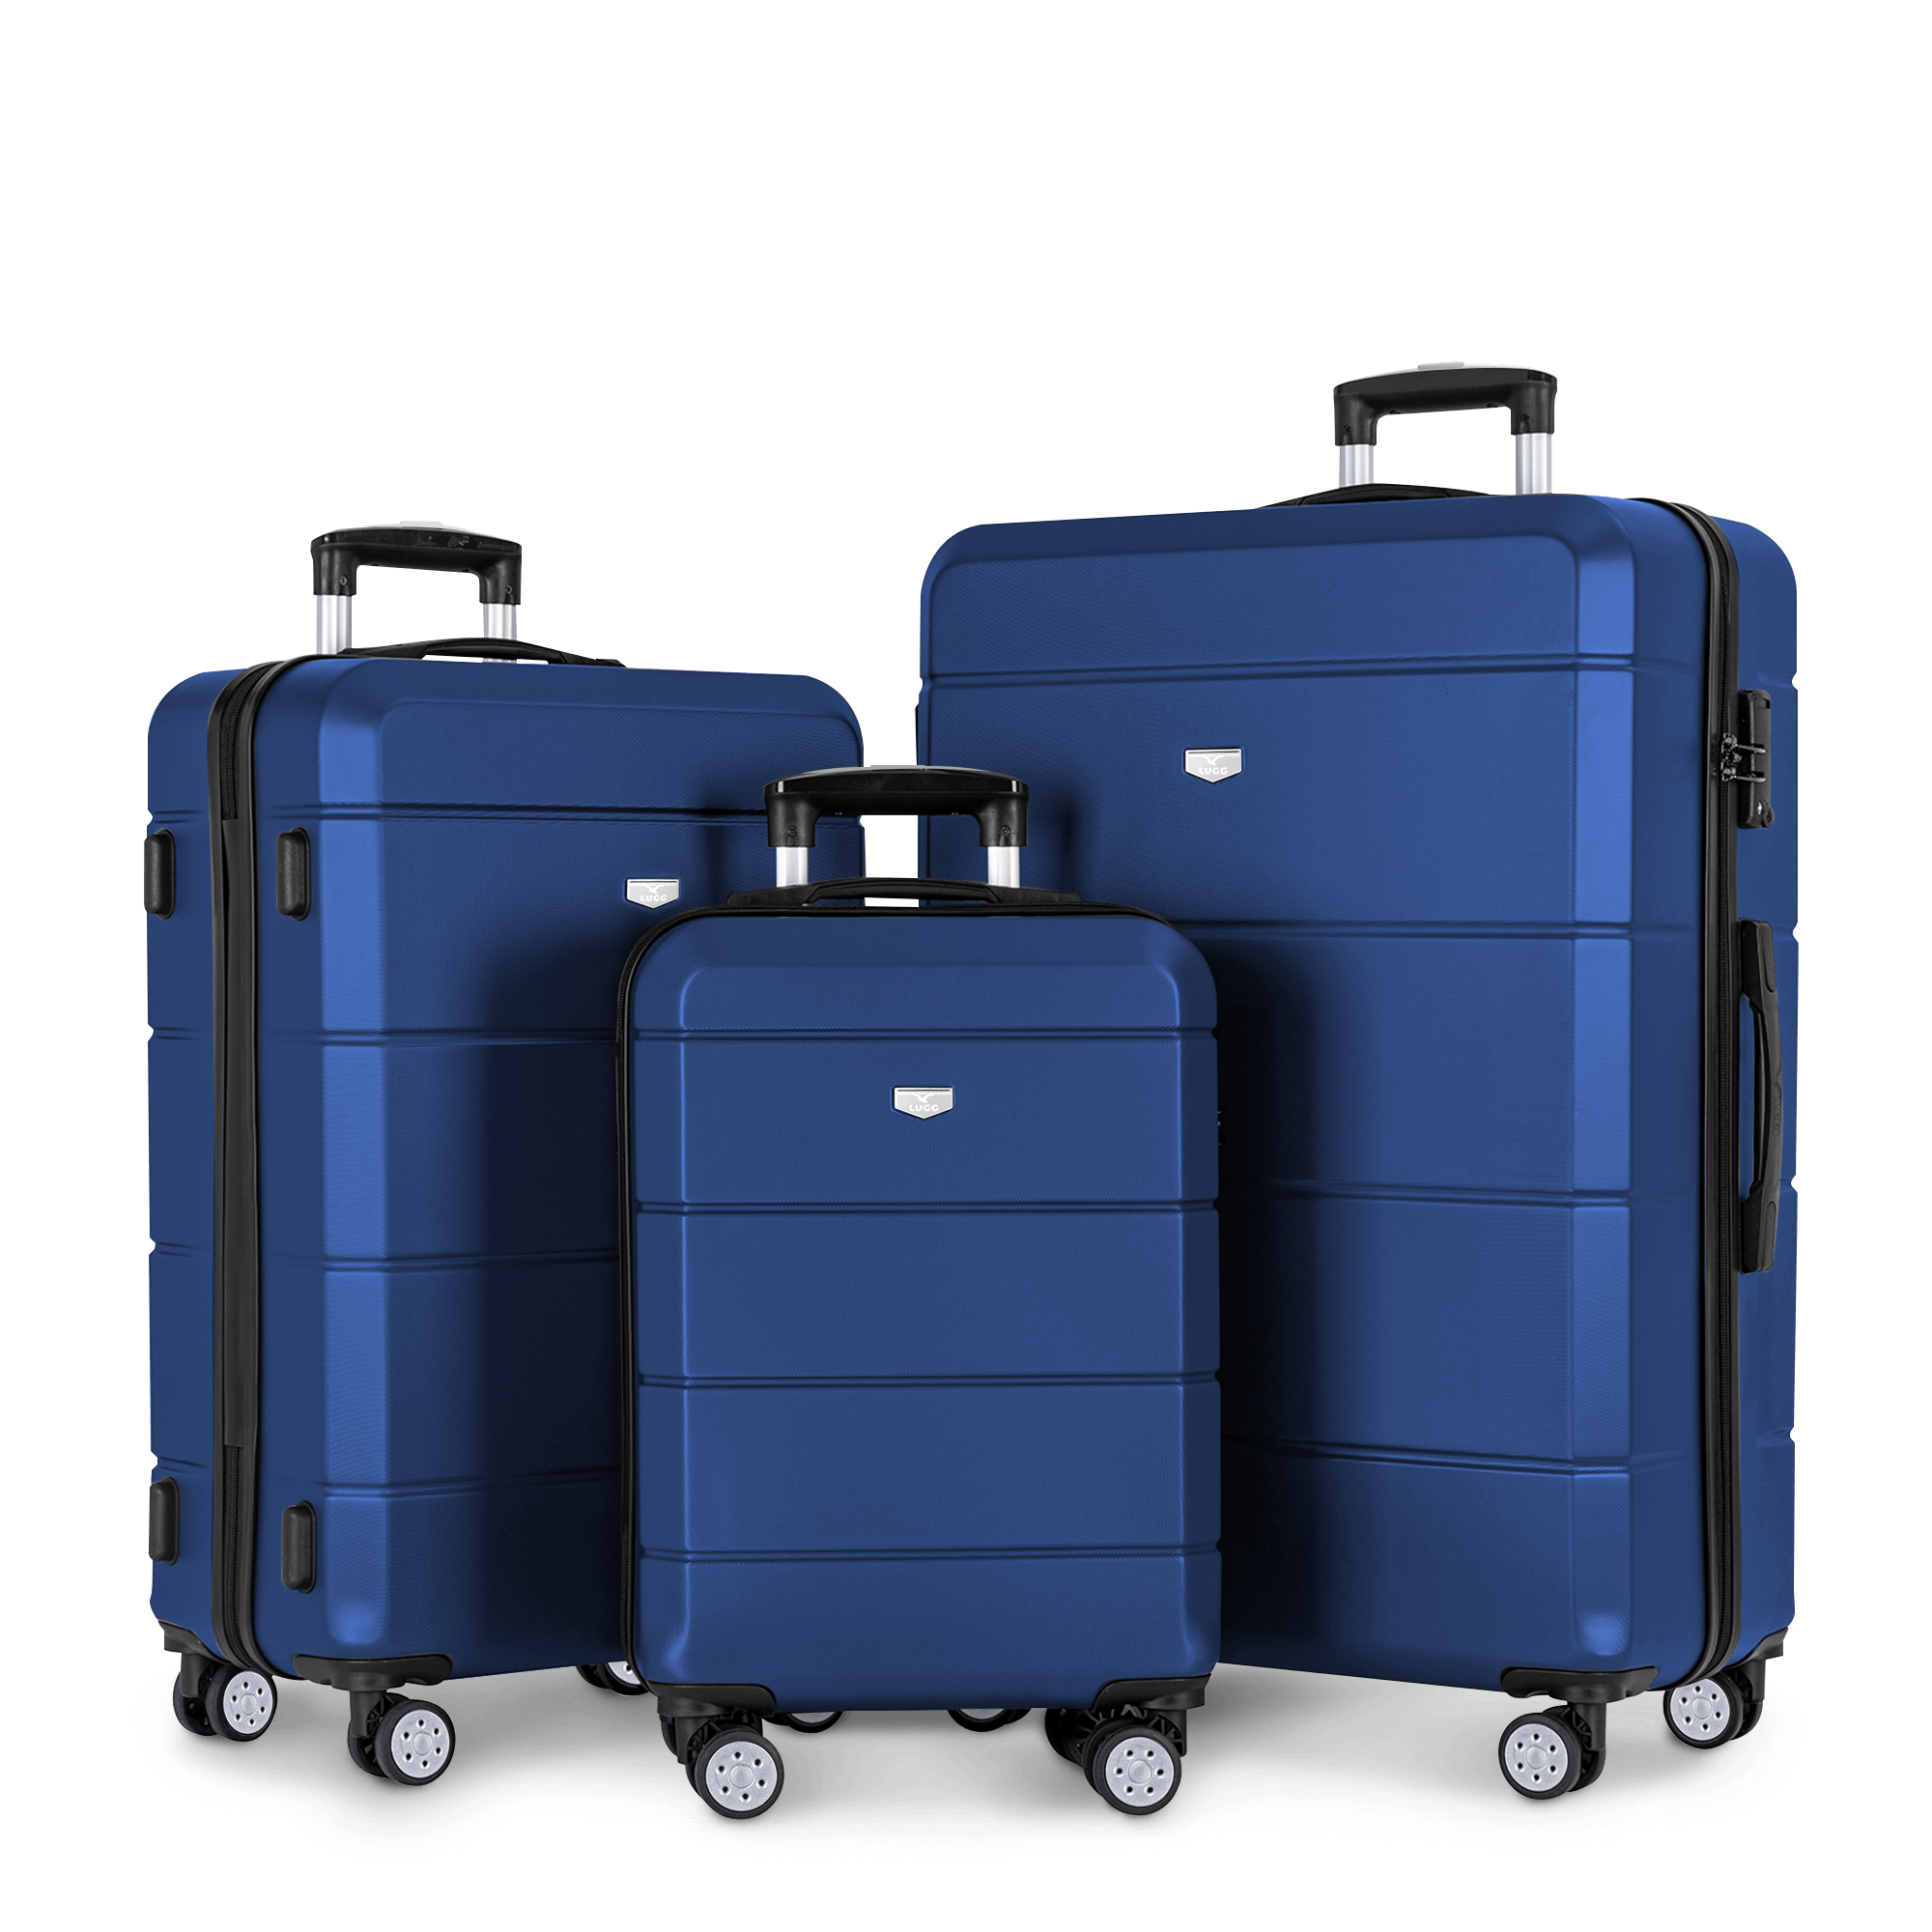 Jetset 3pc Suitcase Set in Blue